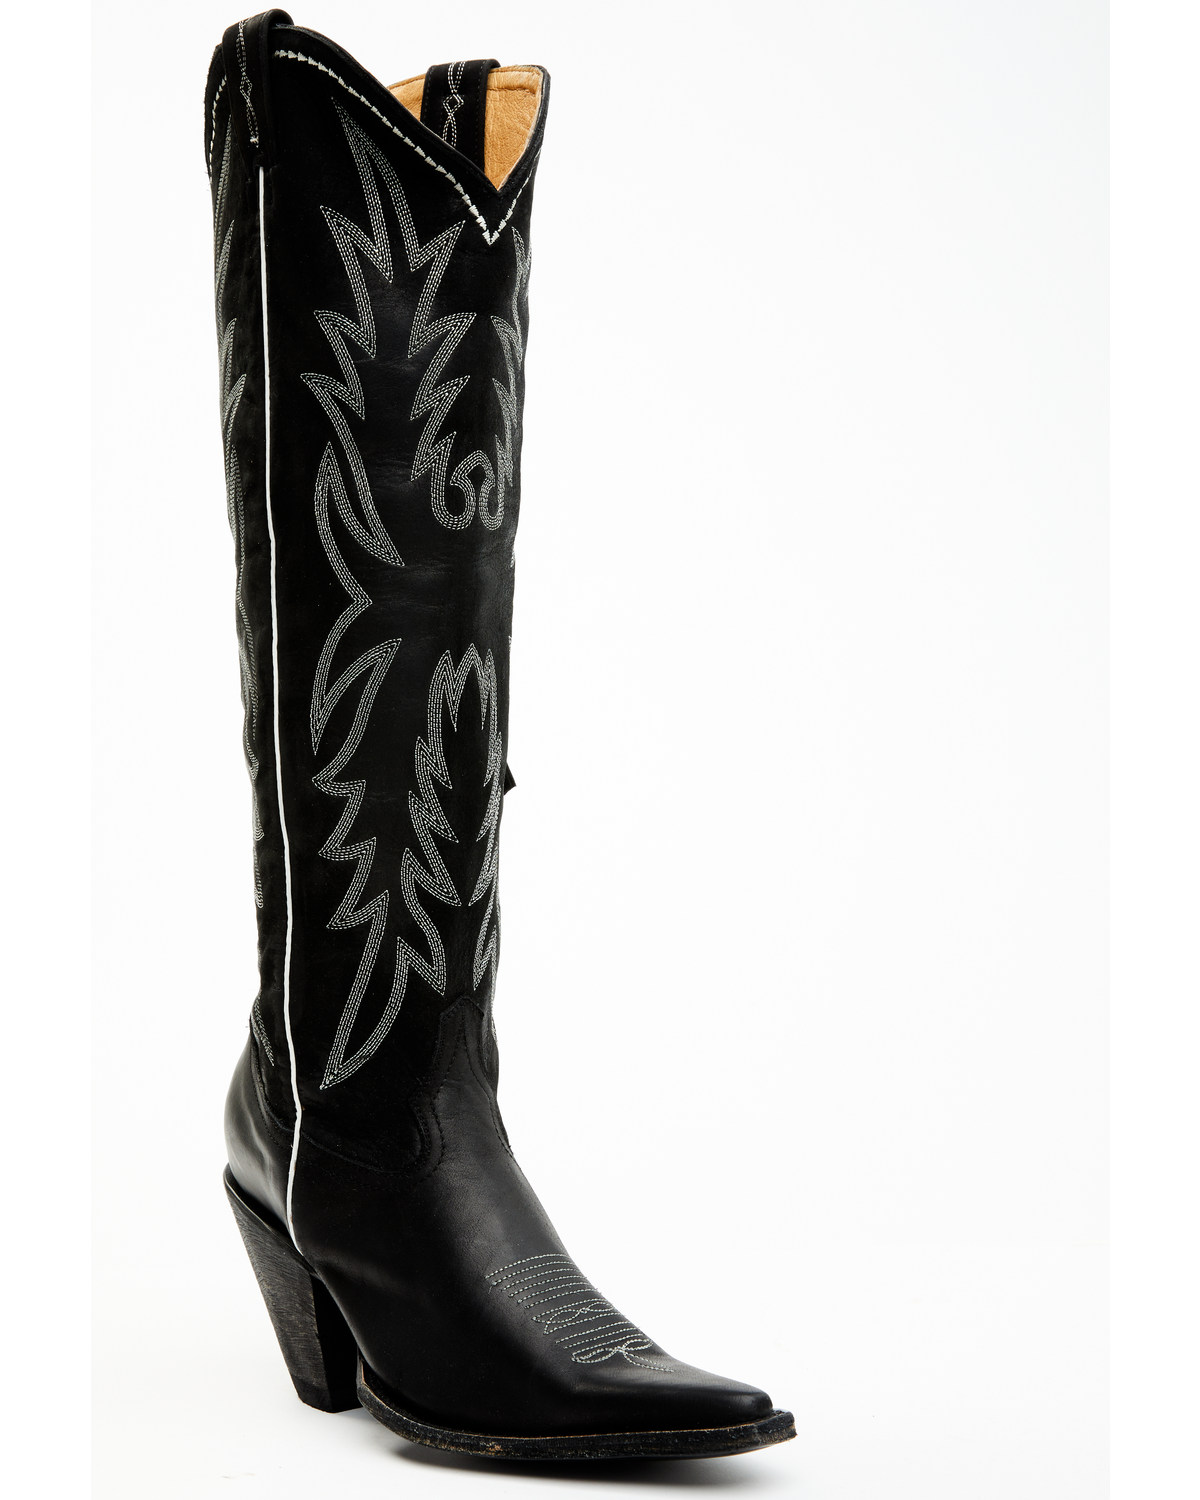 Idyllwind Women's Gwennie Nilo Tall Leather Western Boots - Snip Toe